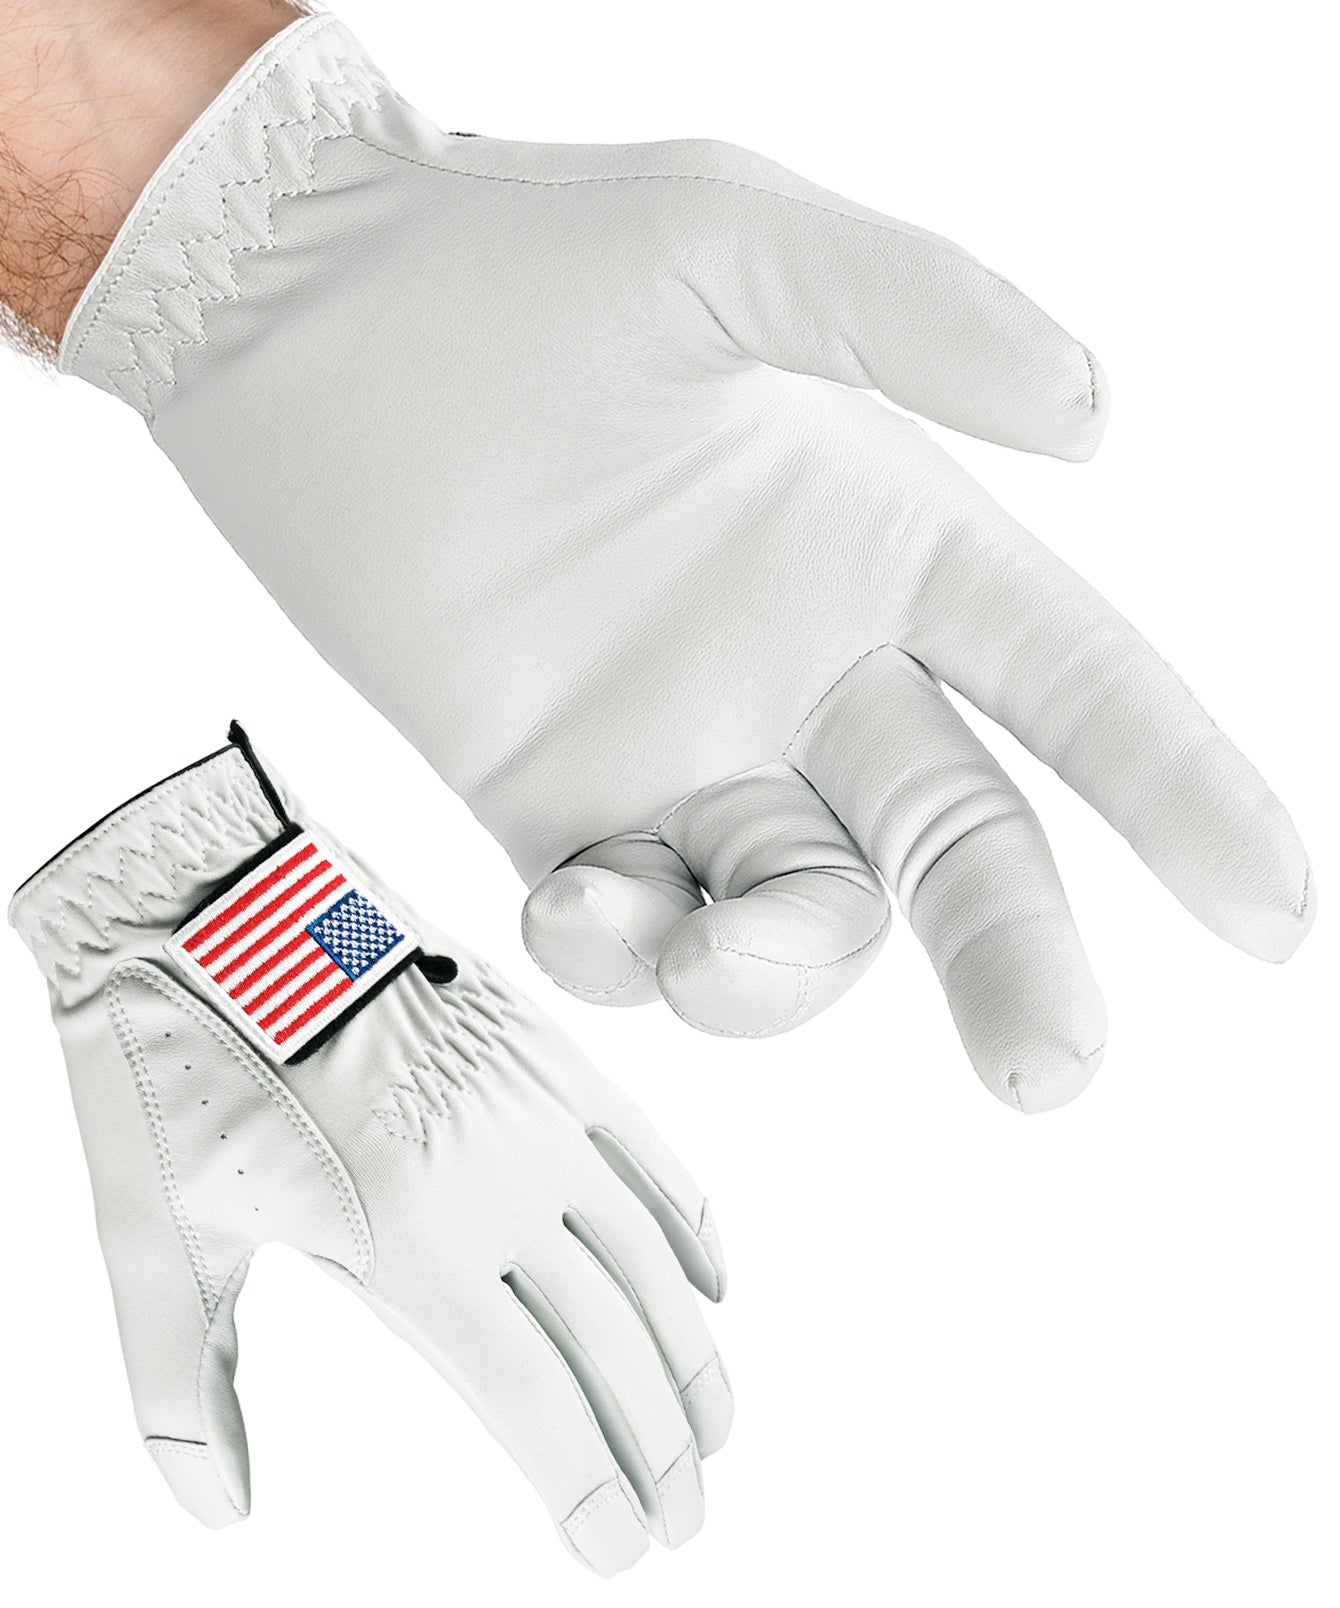 Precision Men’s Golf Glove, Tech PU, US Honor, BadgeFlex for Add-on Badges